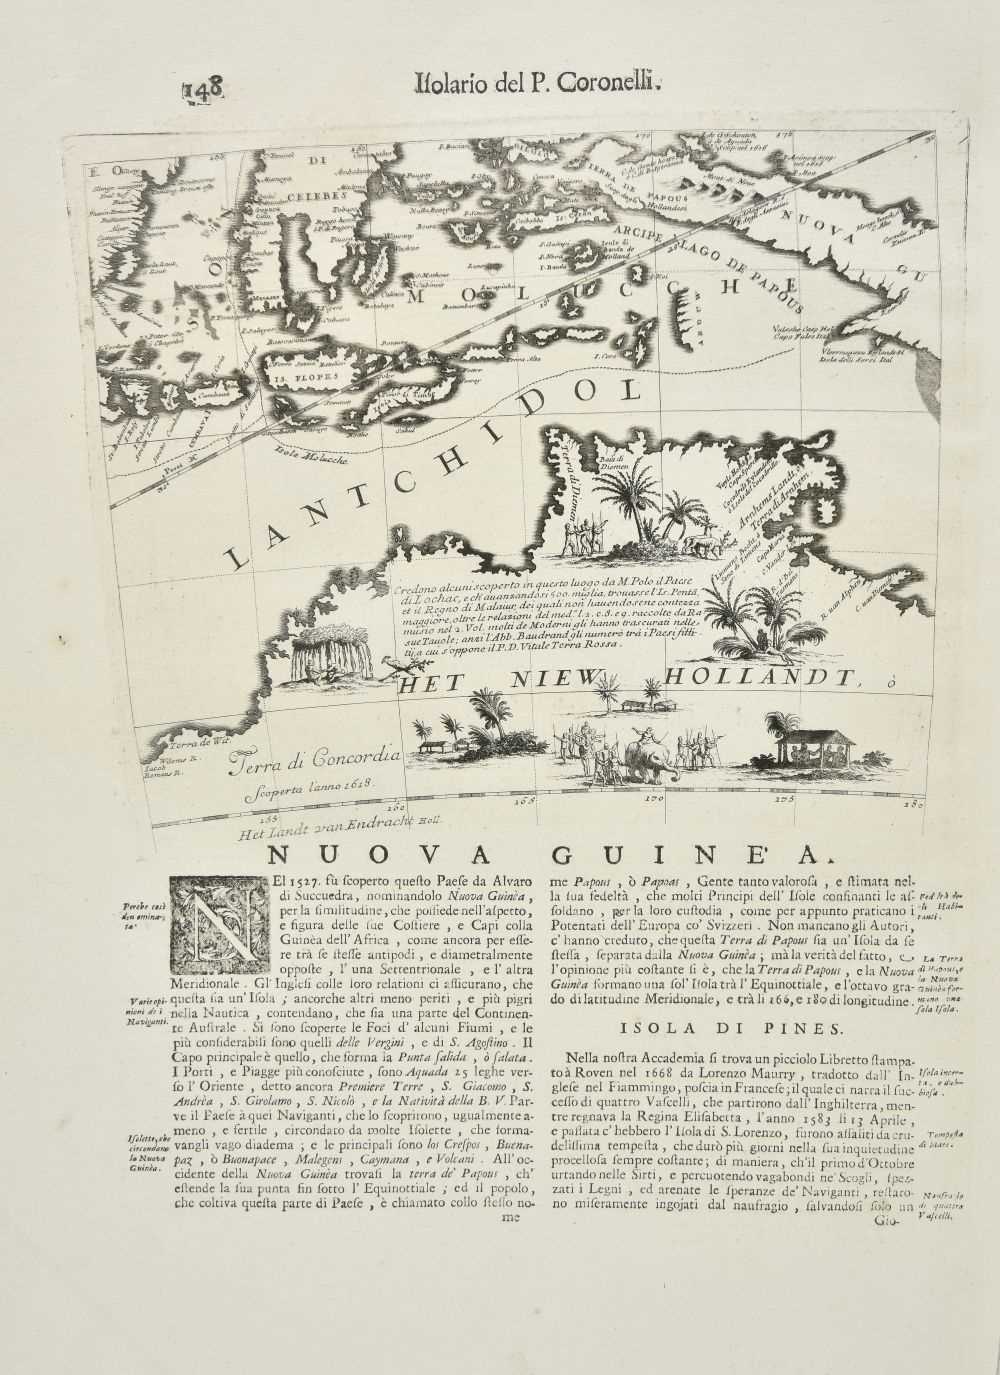 Lot 5 - Australia. Coronelli (Vincenzo), Het Niew Hollandt. Nuova Guinea, 1697